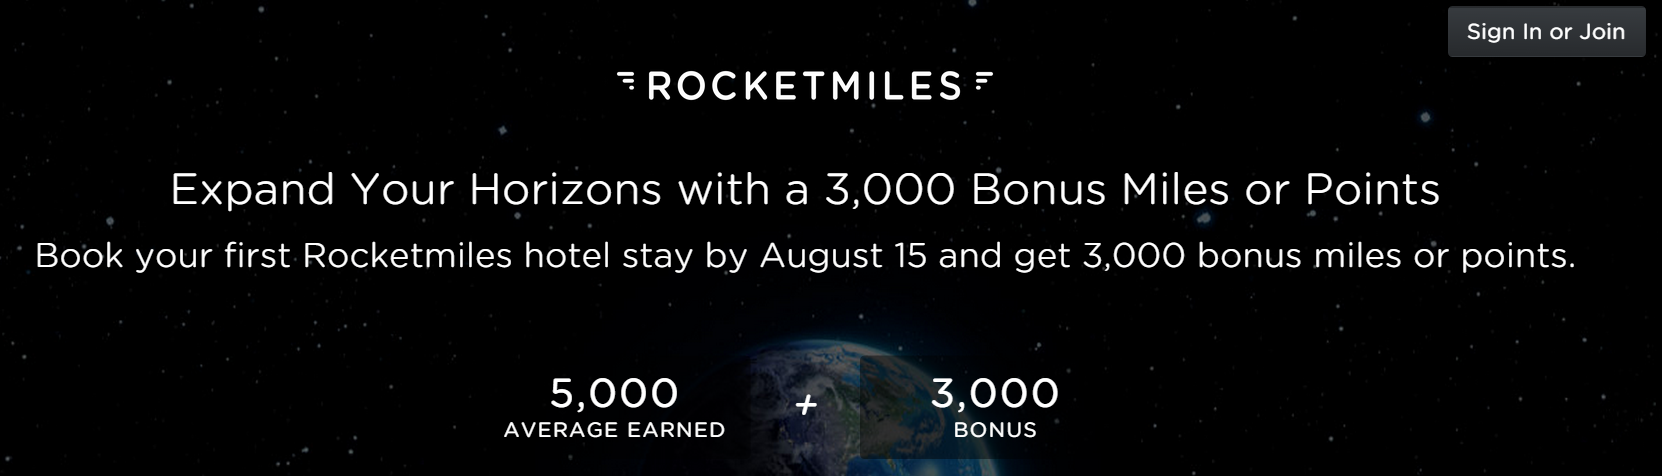 Rocketmiles   Lunar Orbiter 3000 Bonus